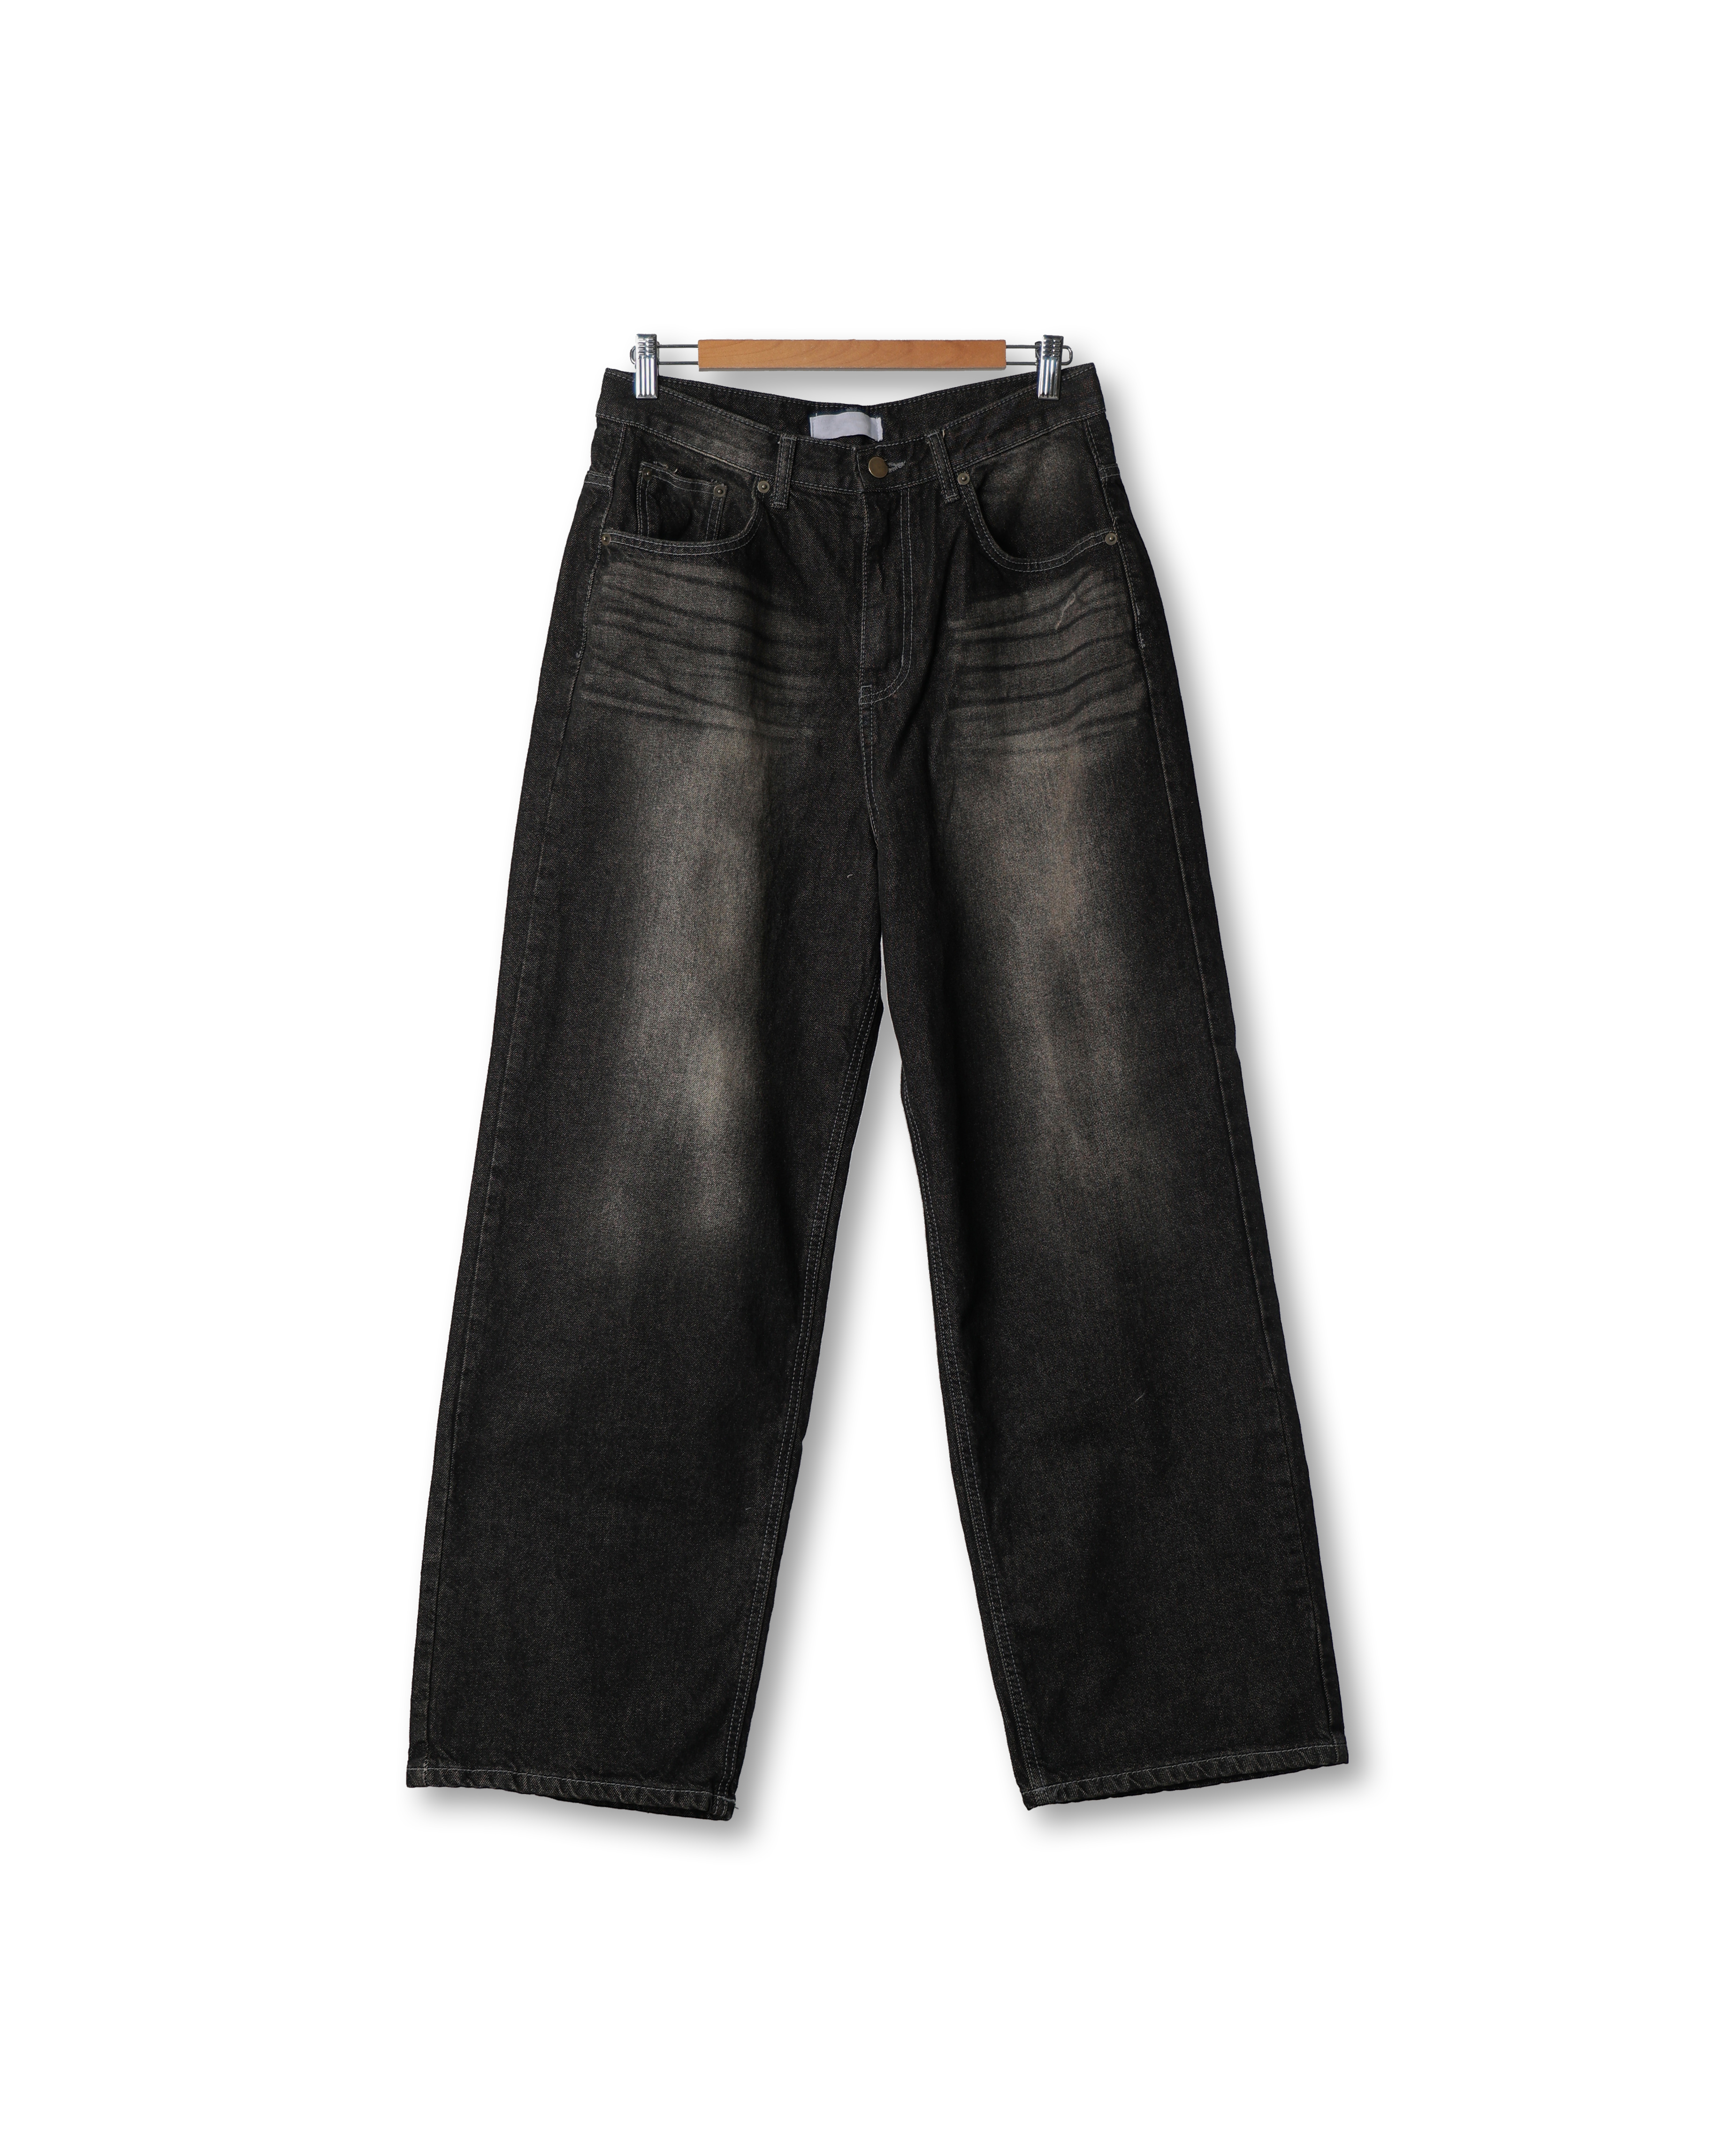 TRIP J 2469 Oil Dusty Daily Jeans (Black Denim)